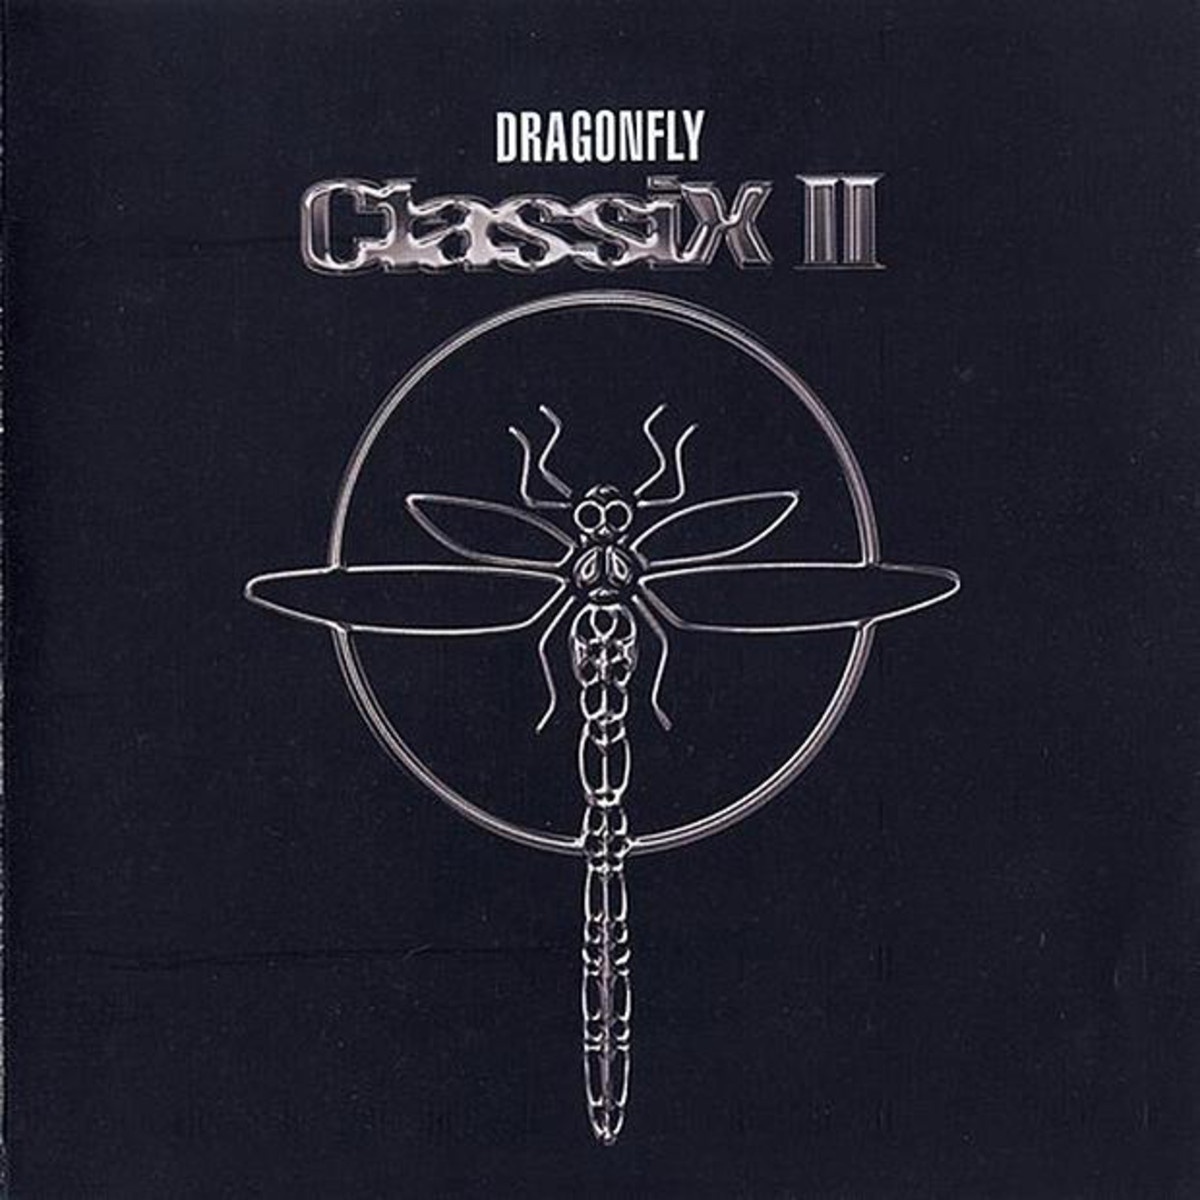 Dragonfly - Classix II